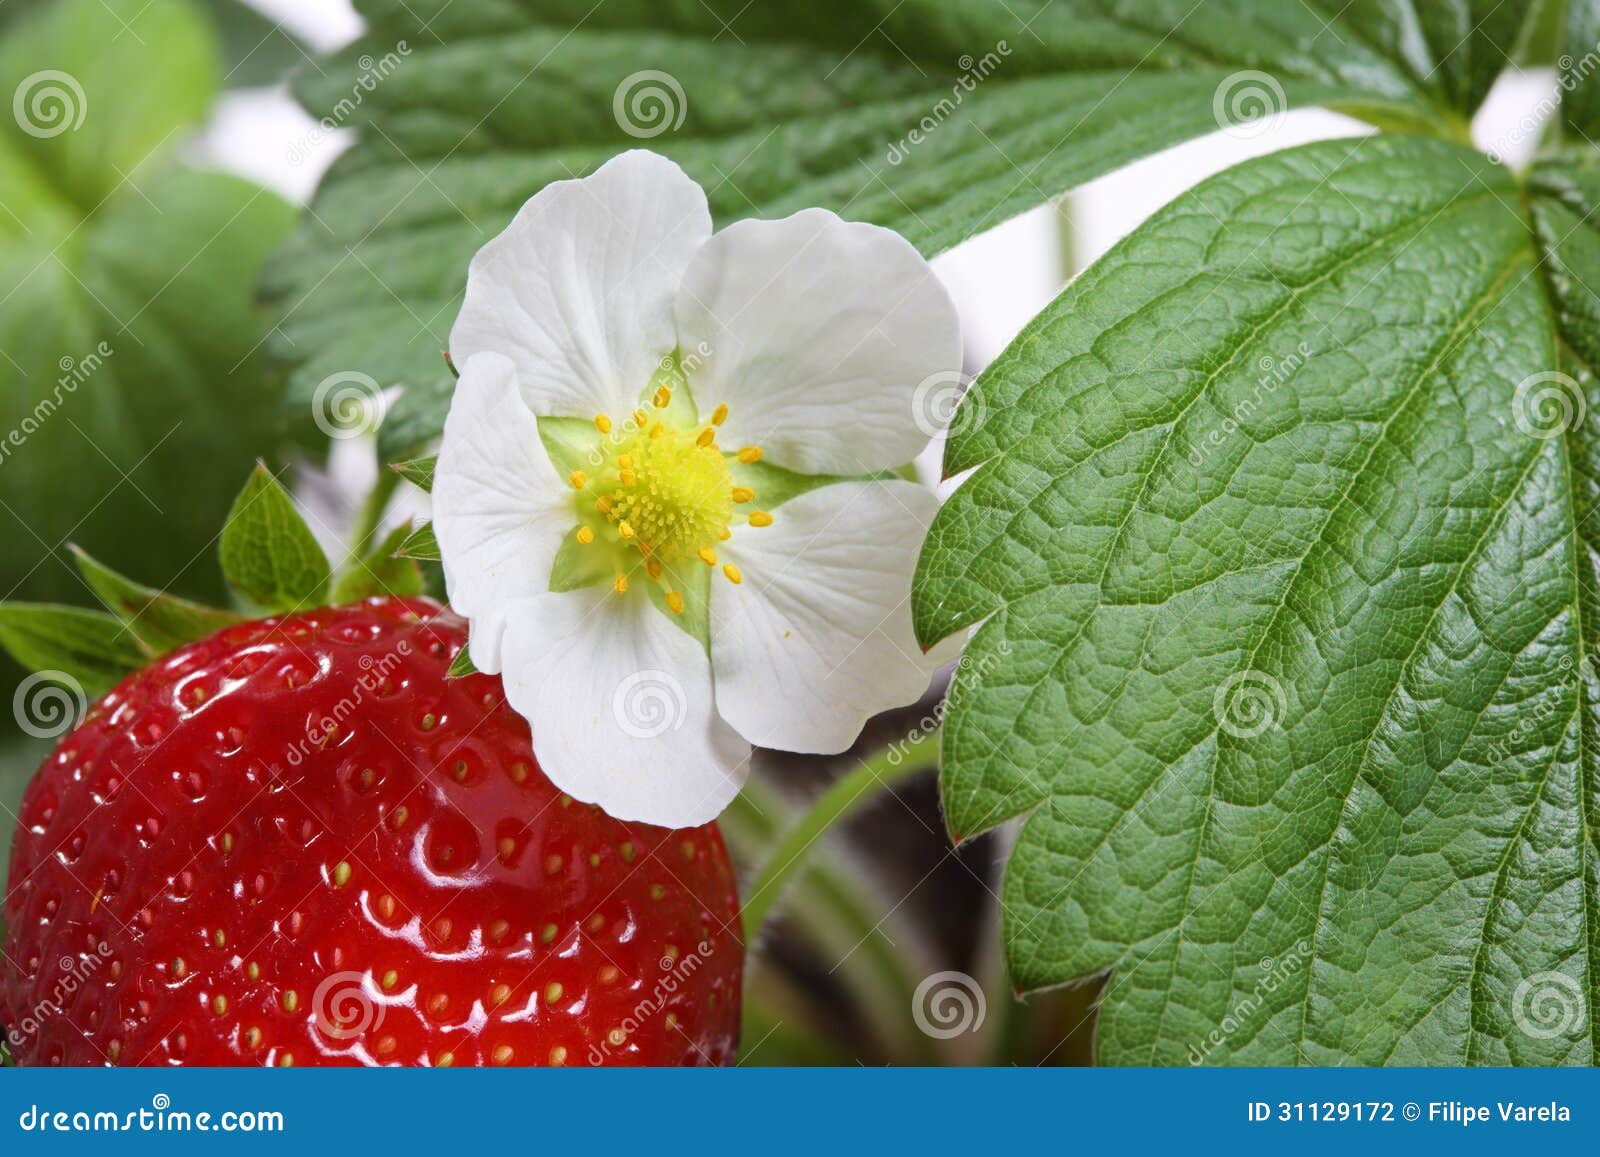 macro of a strawberry bush plant